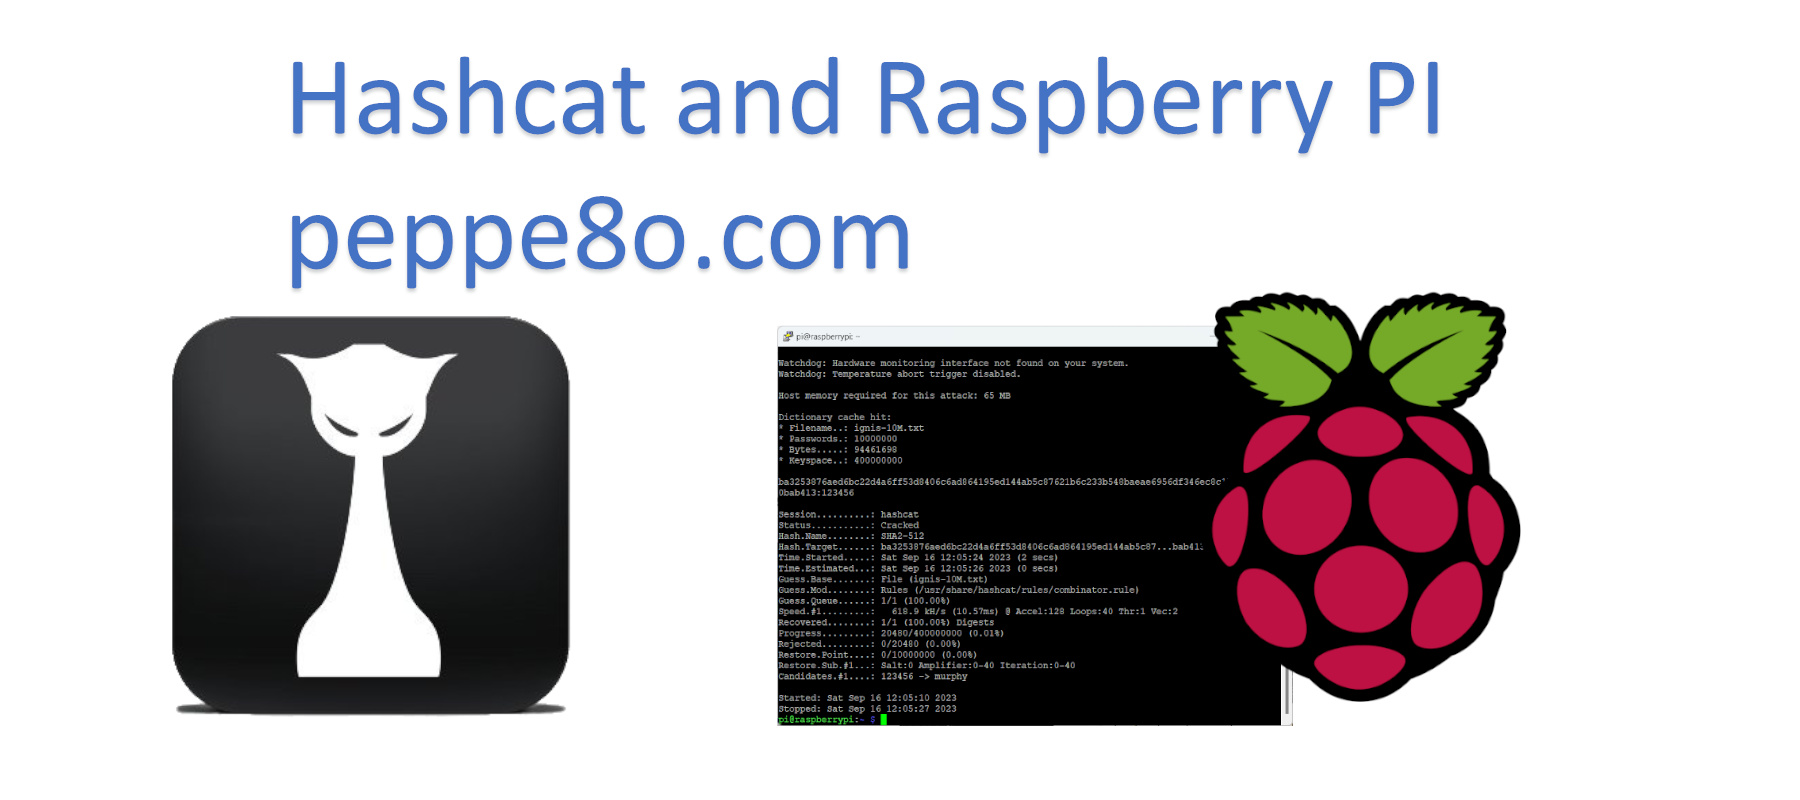 hashcat-raspberry-pi-featured-image